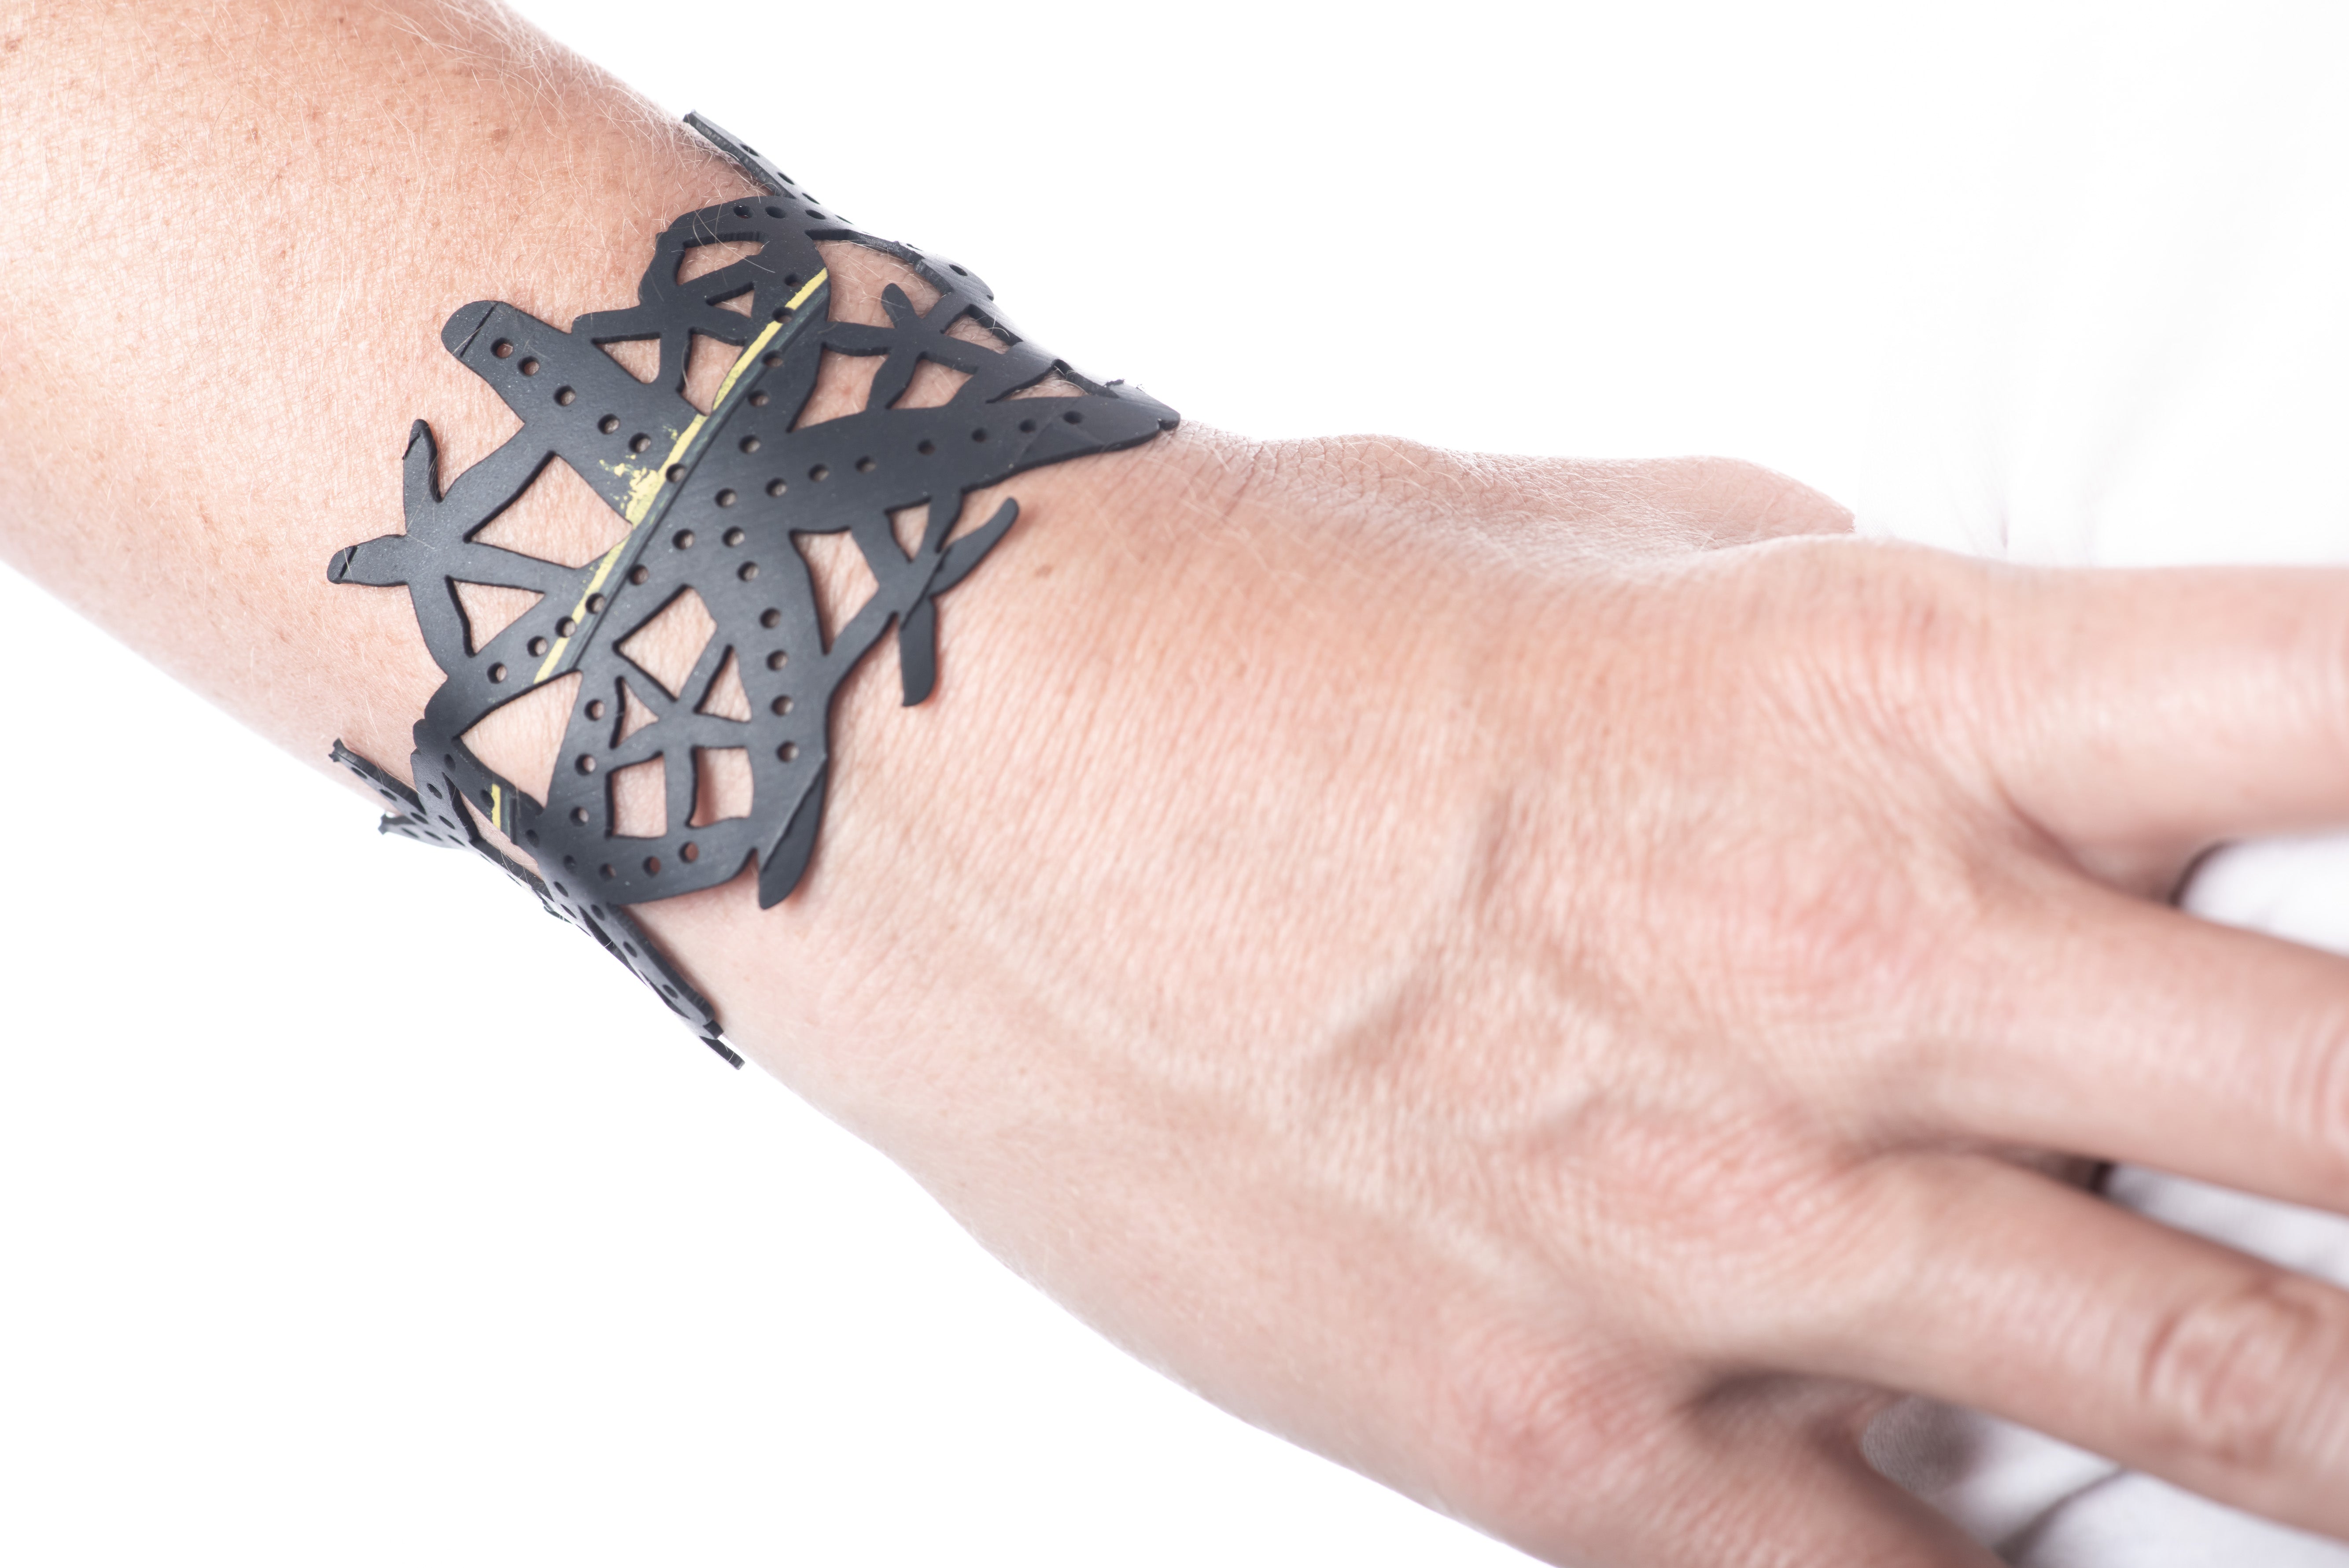 starfish bracelet